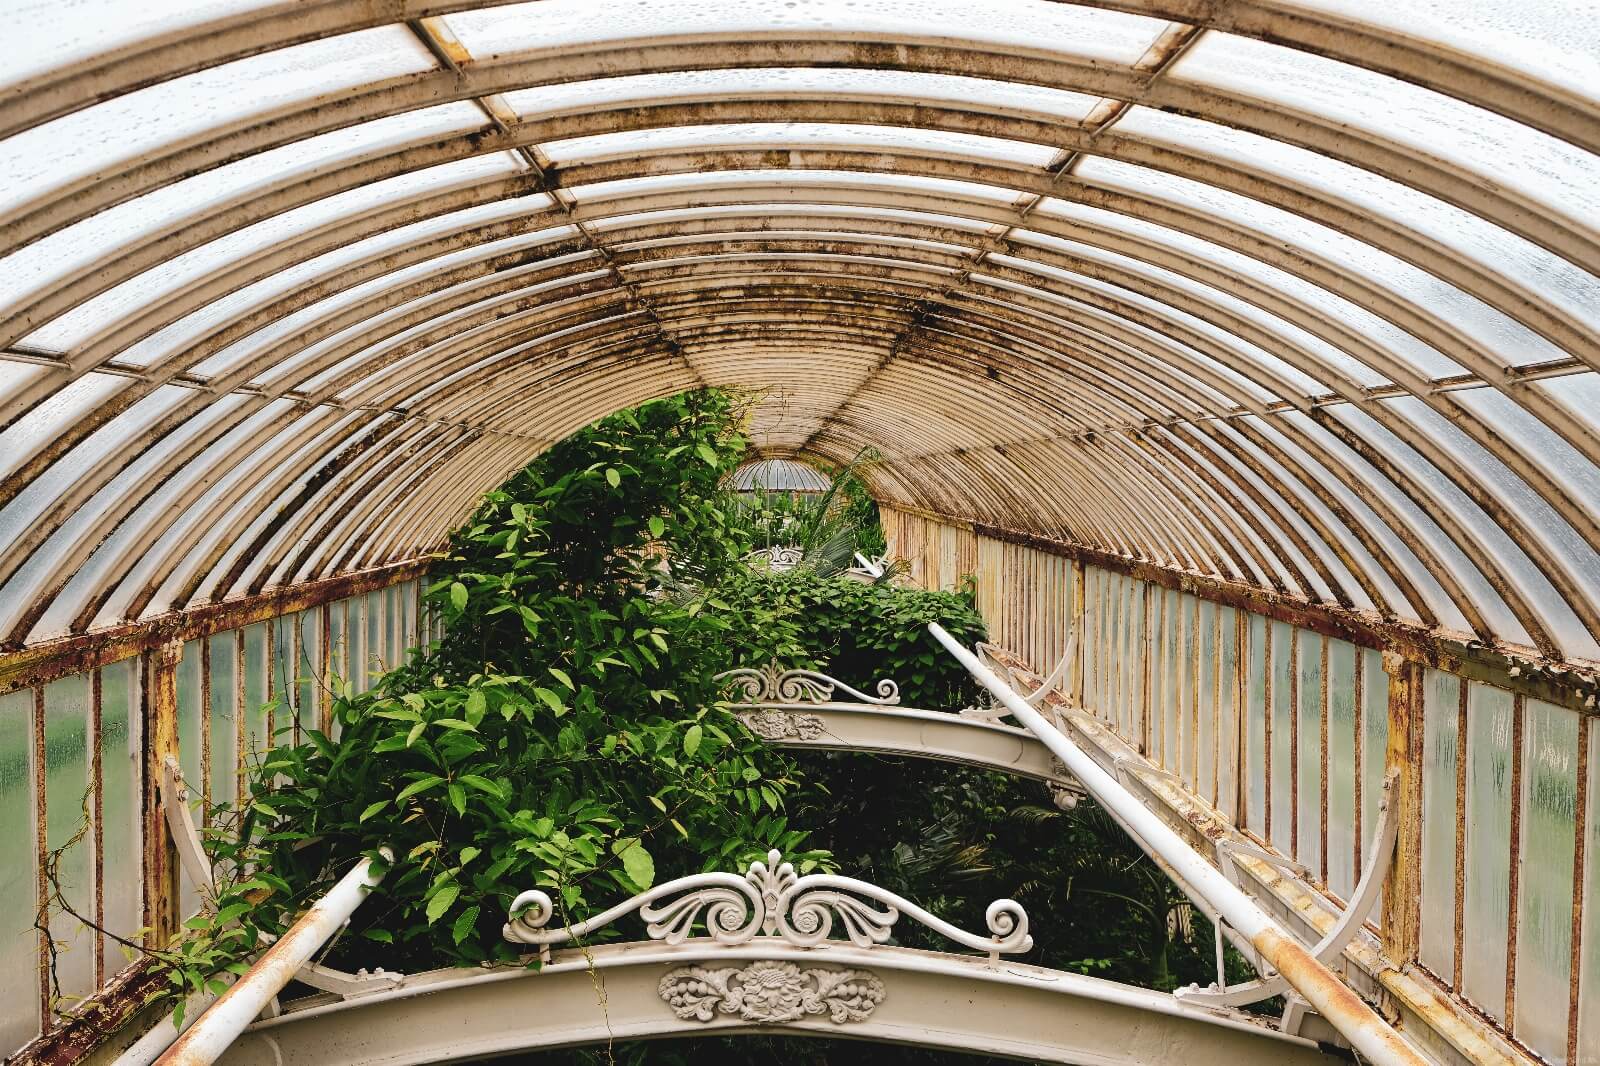 Image of Royal Botanic Gardens Kew by Jonny Brown